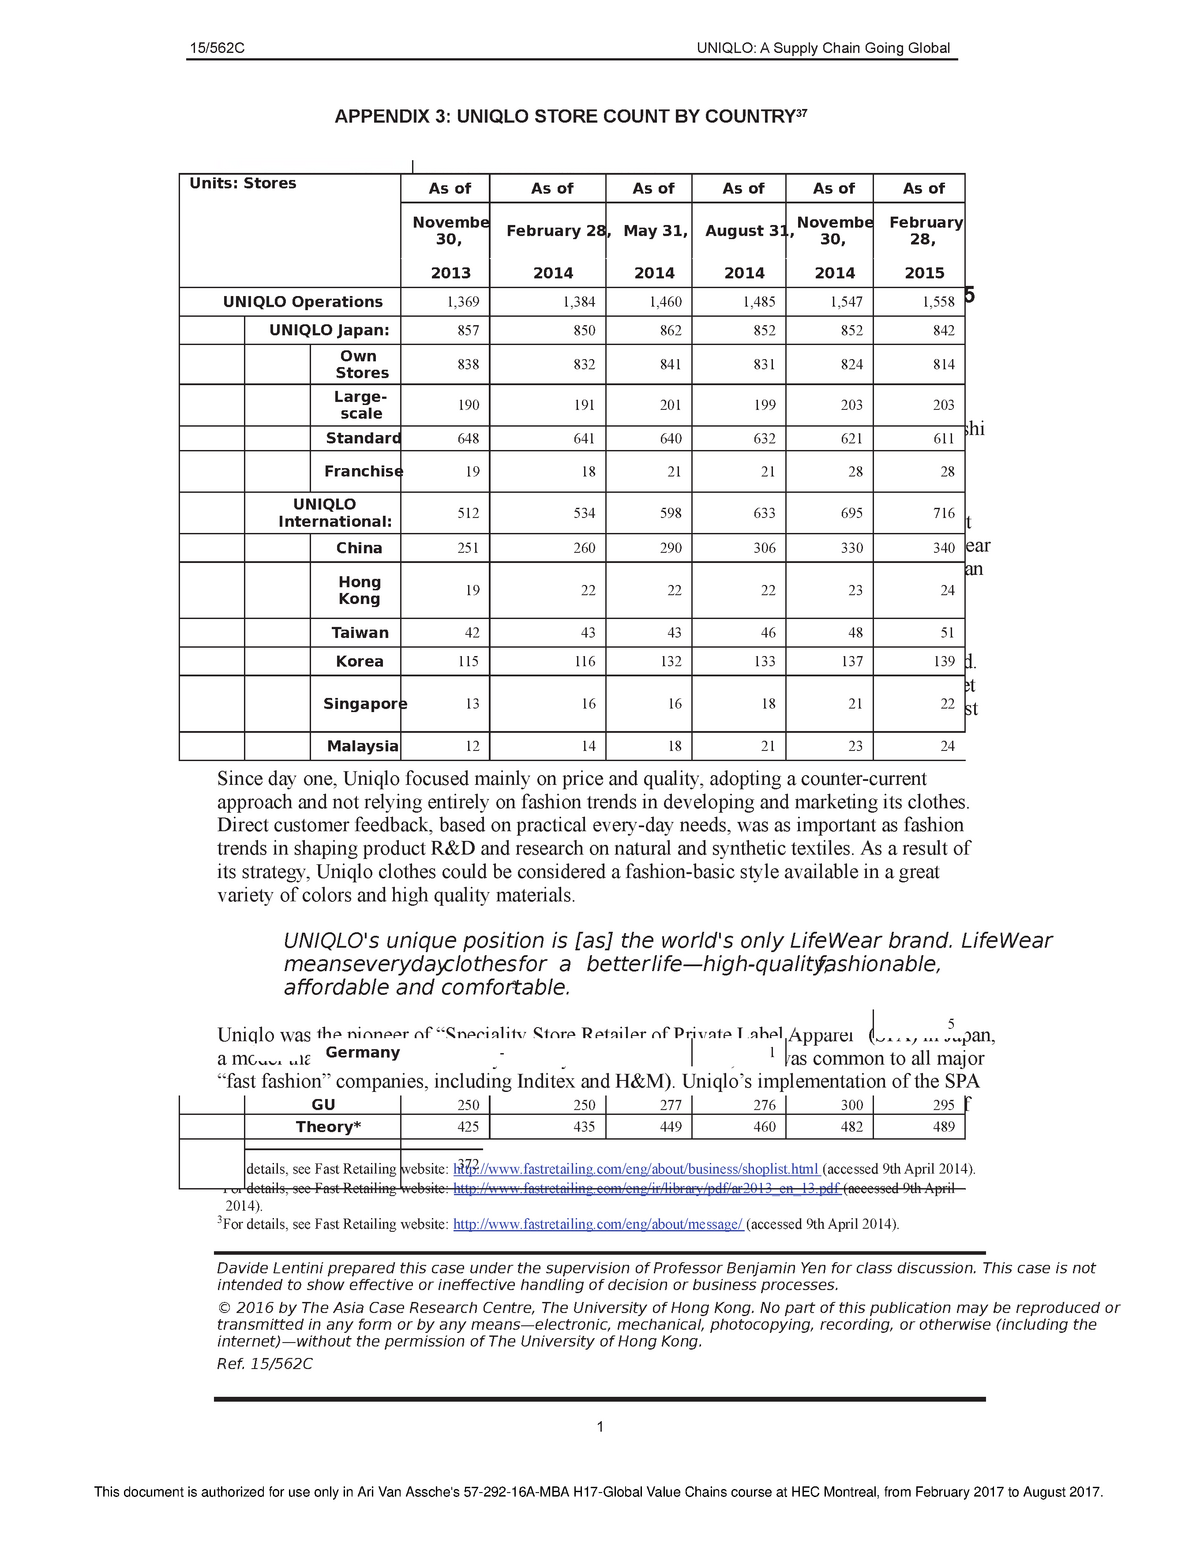 Comparing Zara and UNIQLO Using Supply Chain Analysis Deshmukh  PDF